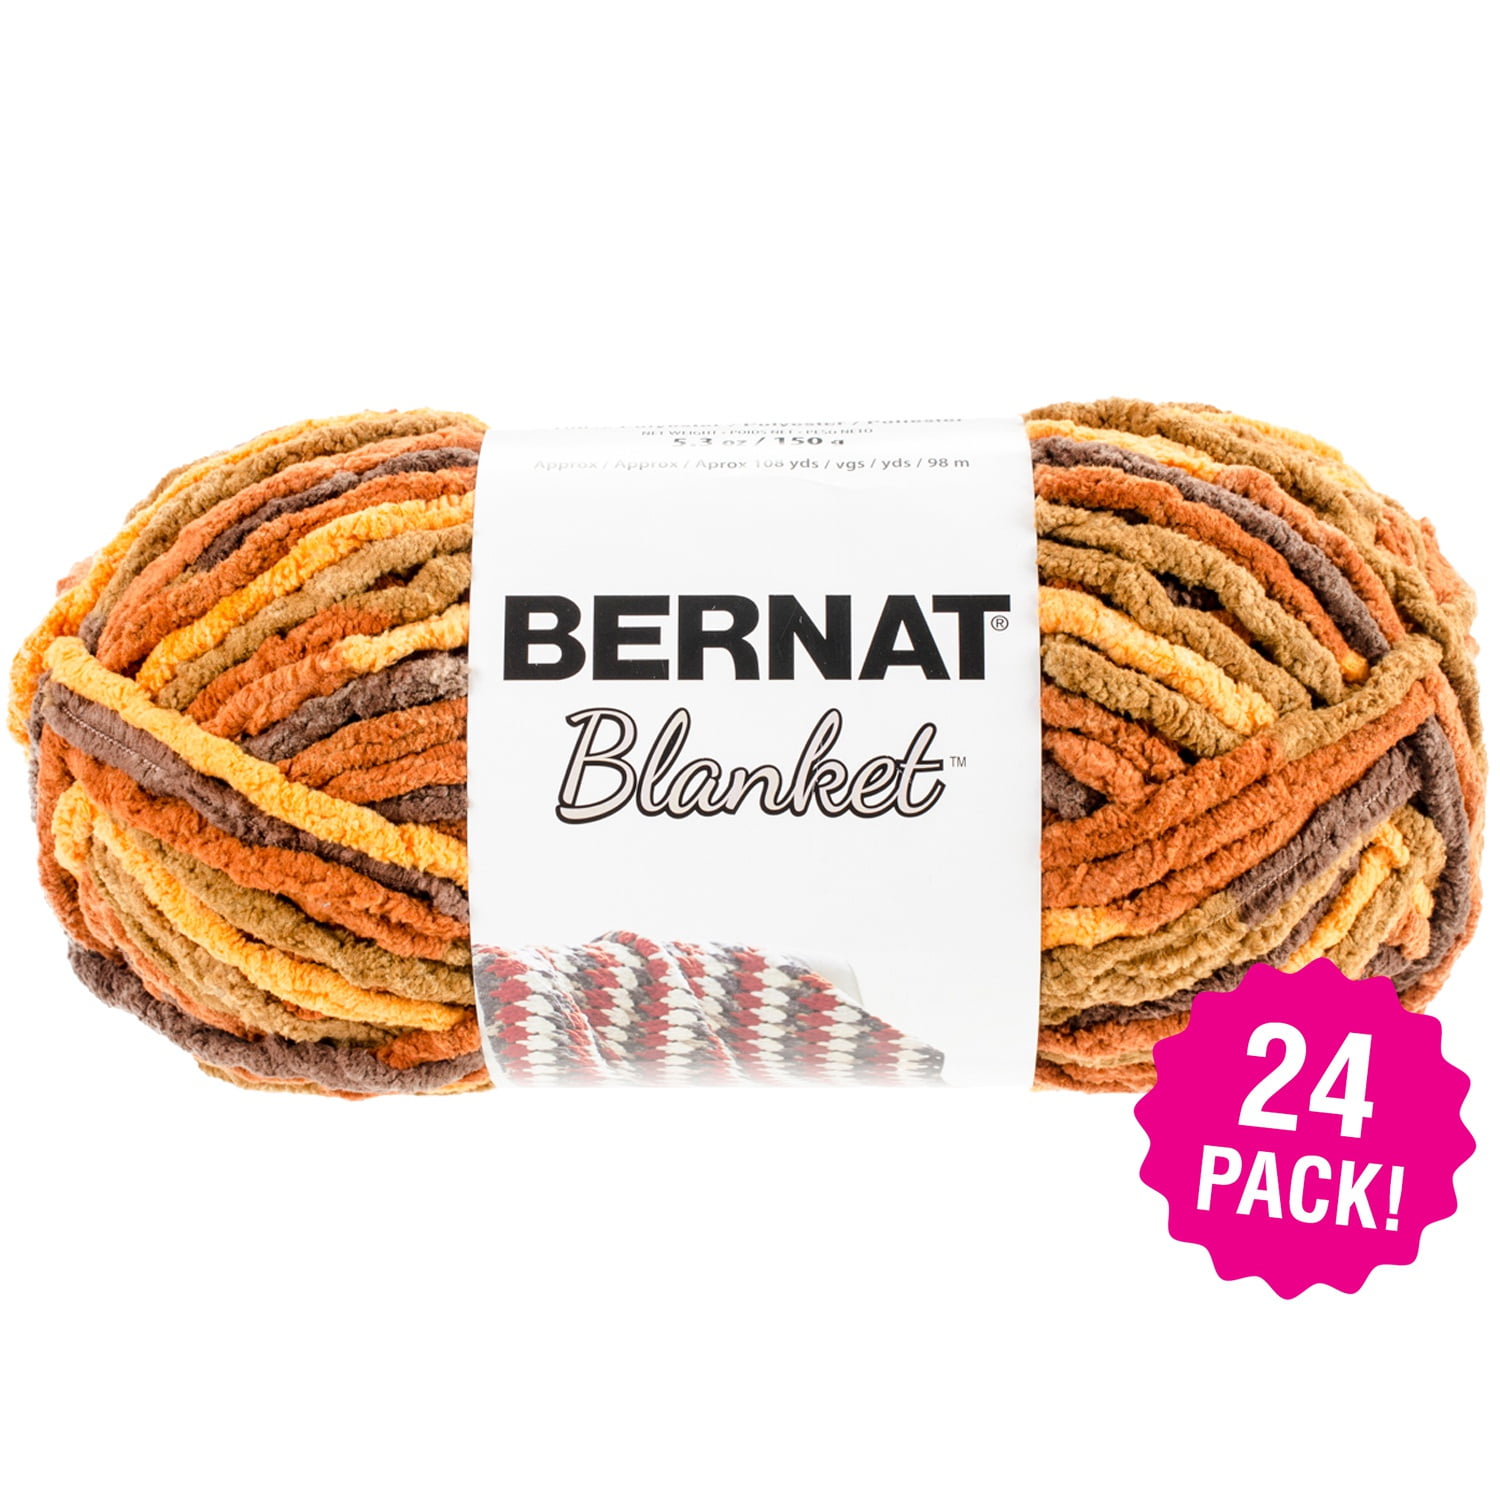 Bernat Blanket Yarn - Fall Leaves, Multipack of 24 - Walmart.com